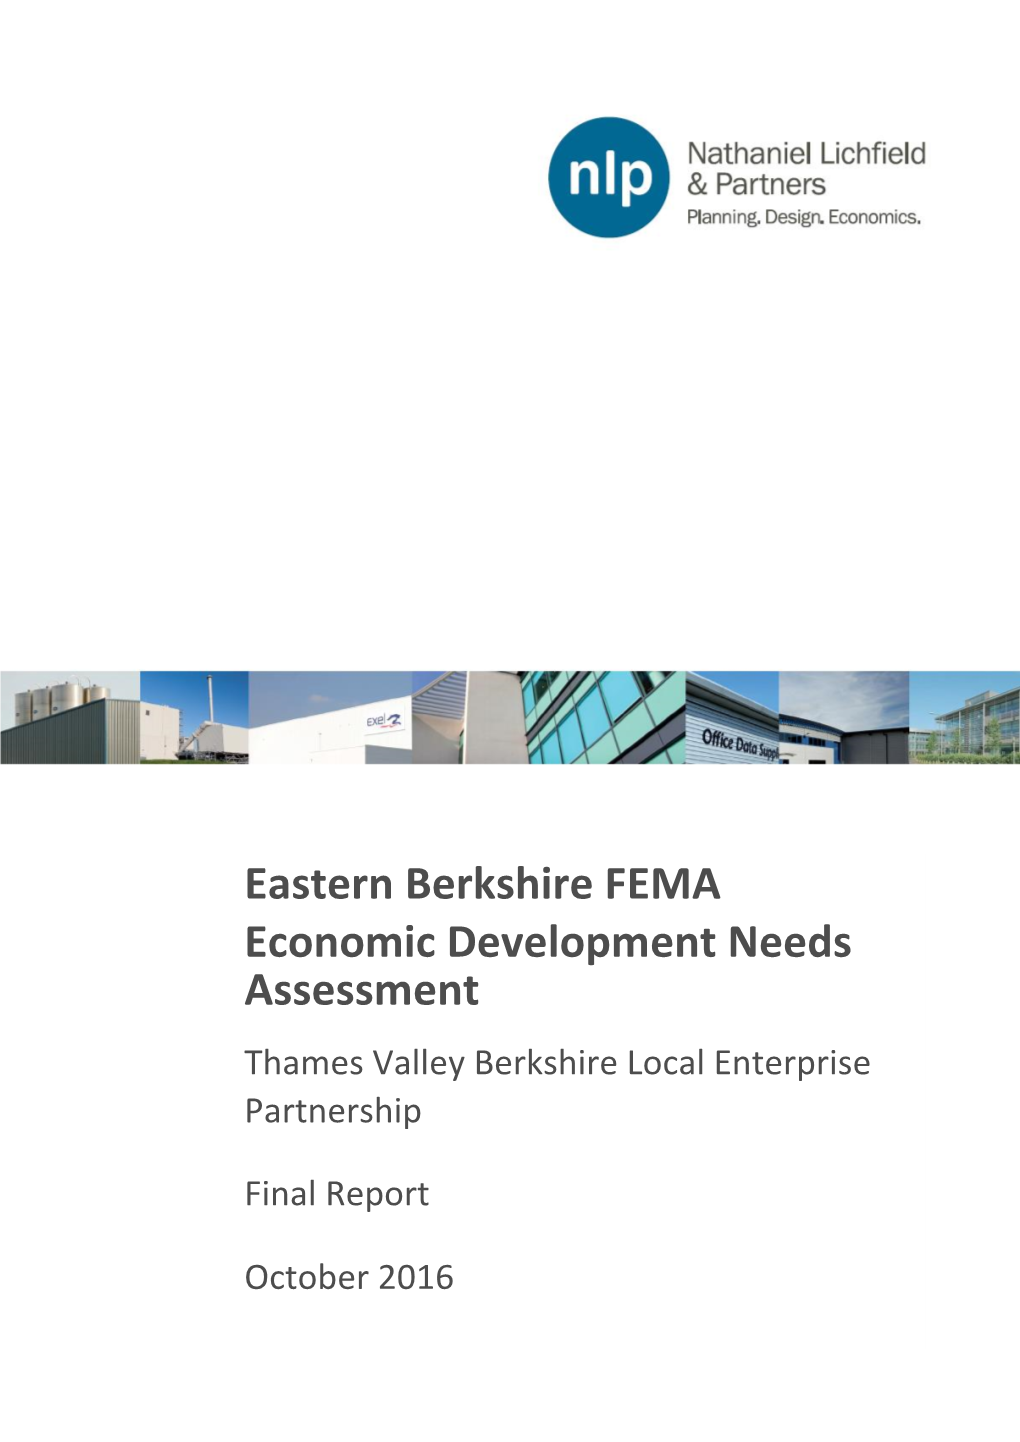 Eastern Berkshire FEMA Economic Development Needs Assessment